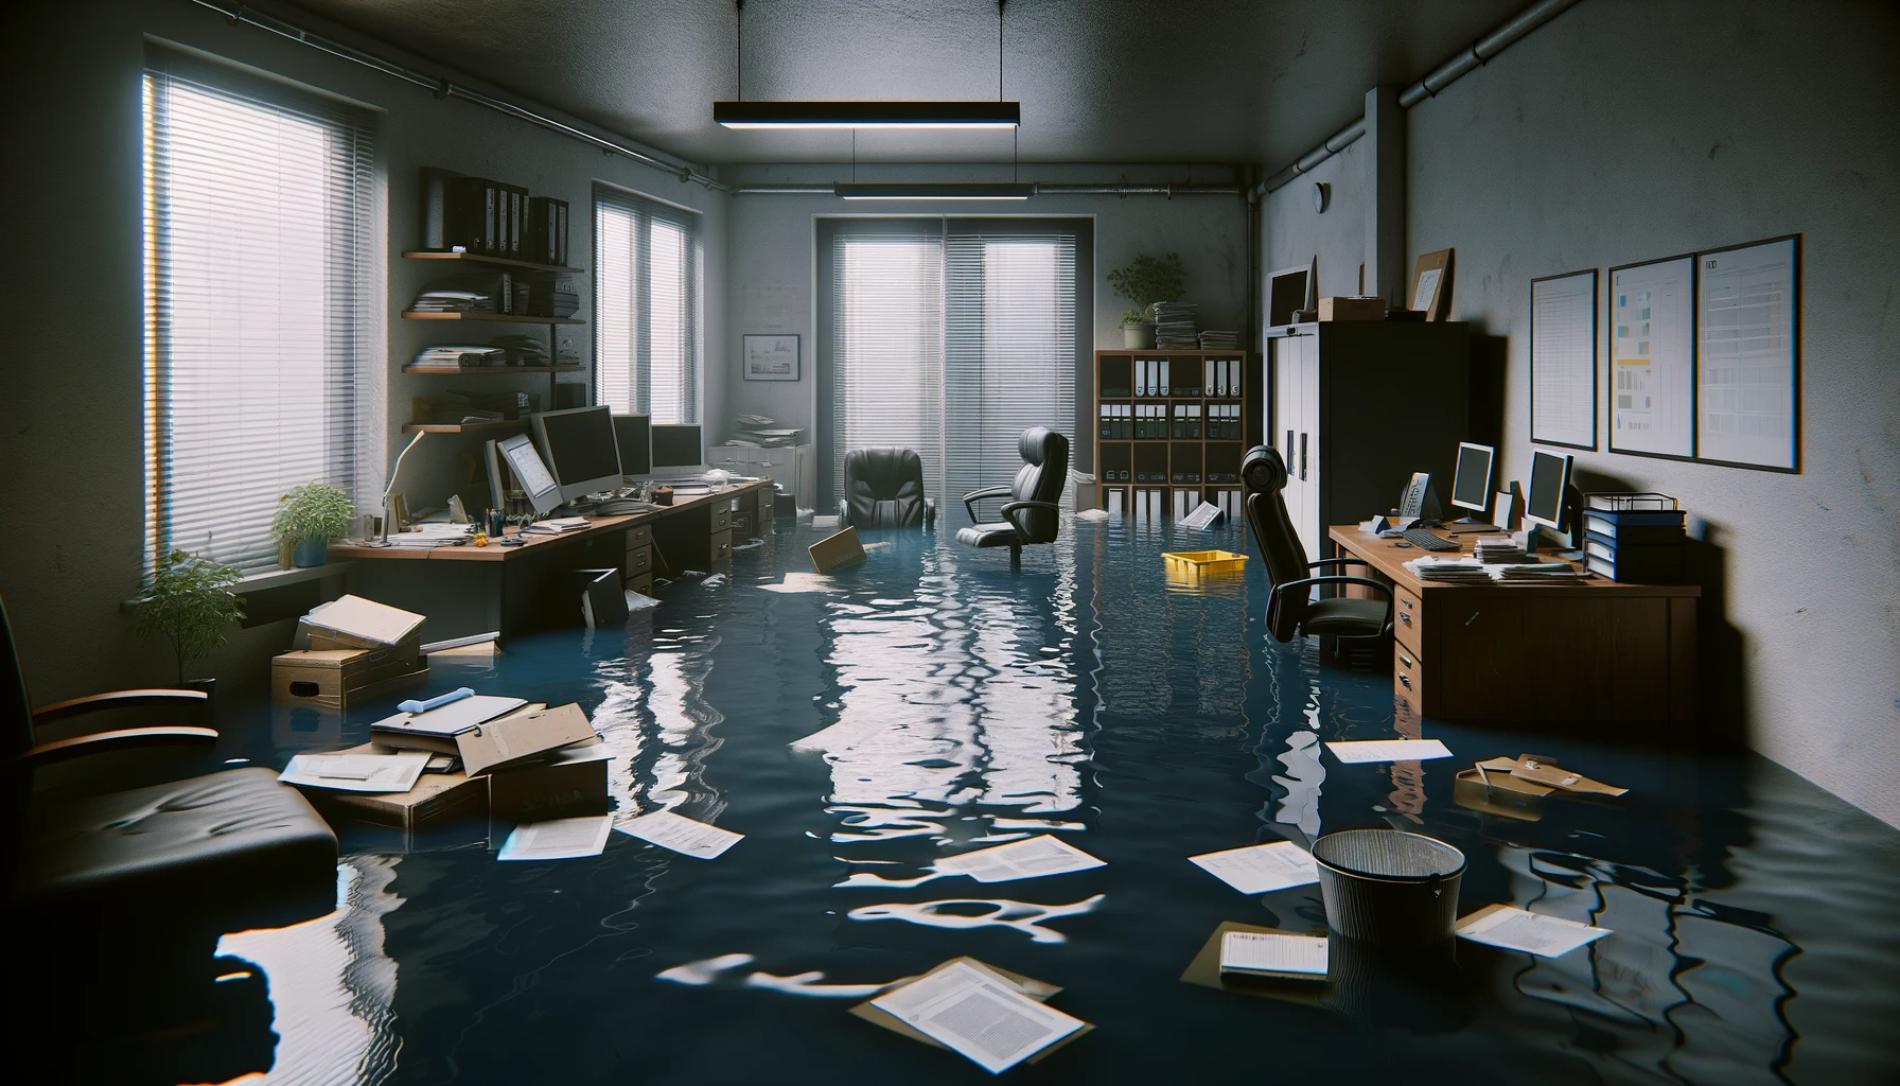 Et oversvømt kontor med papirer som flyter